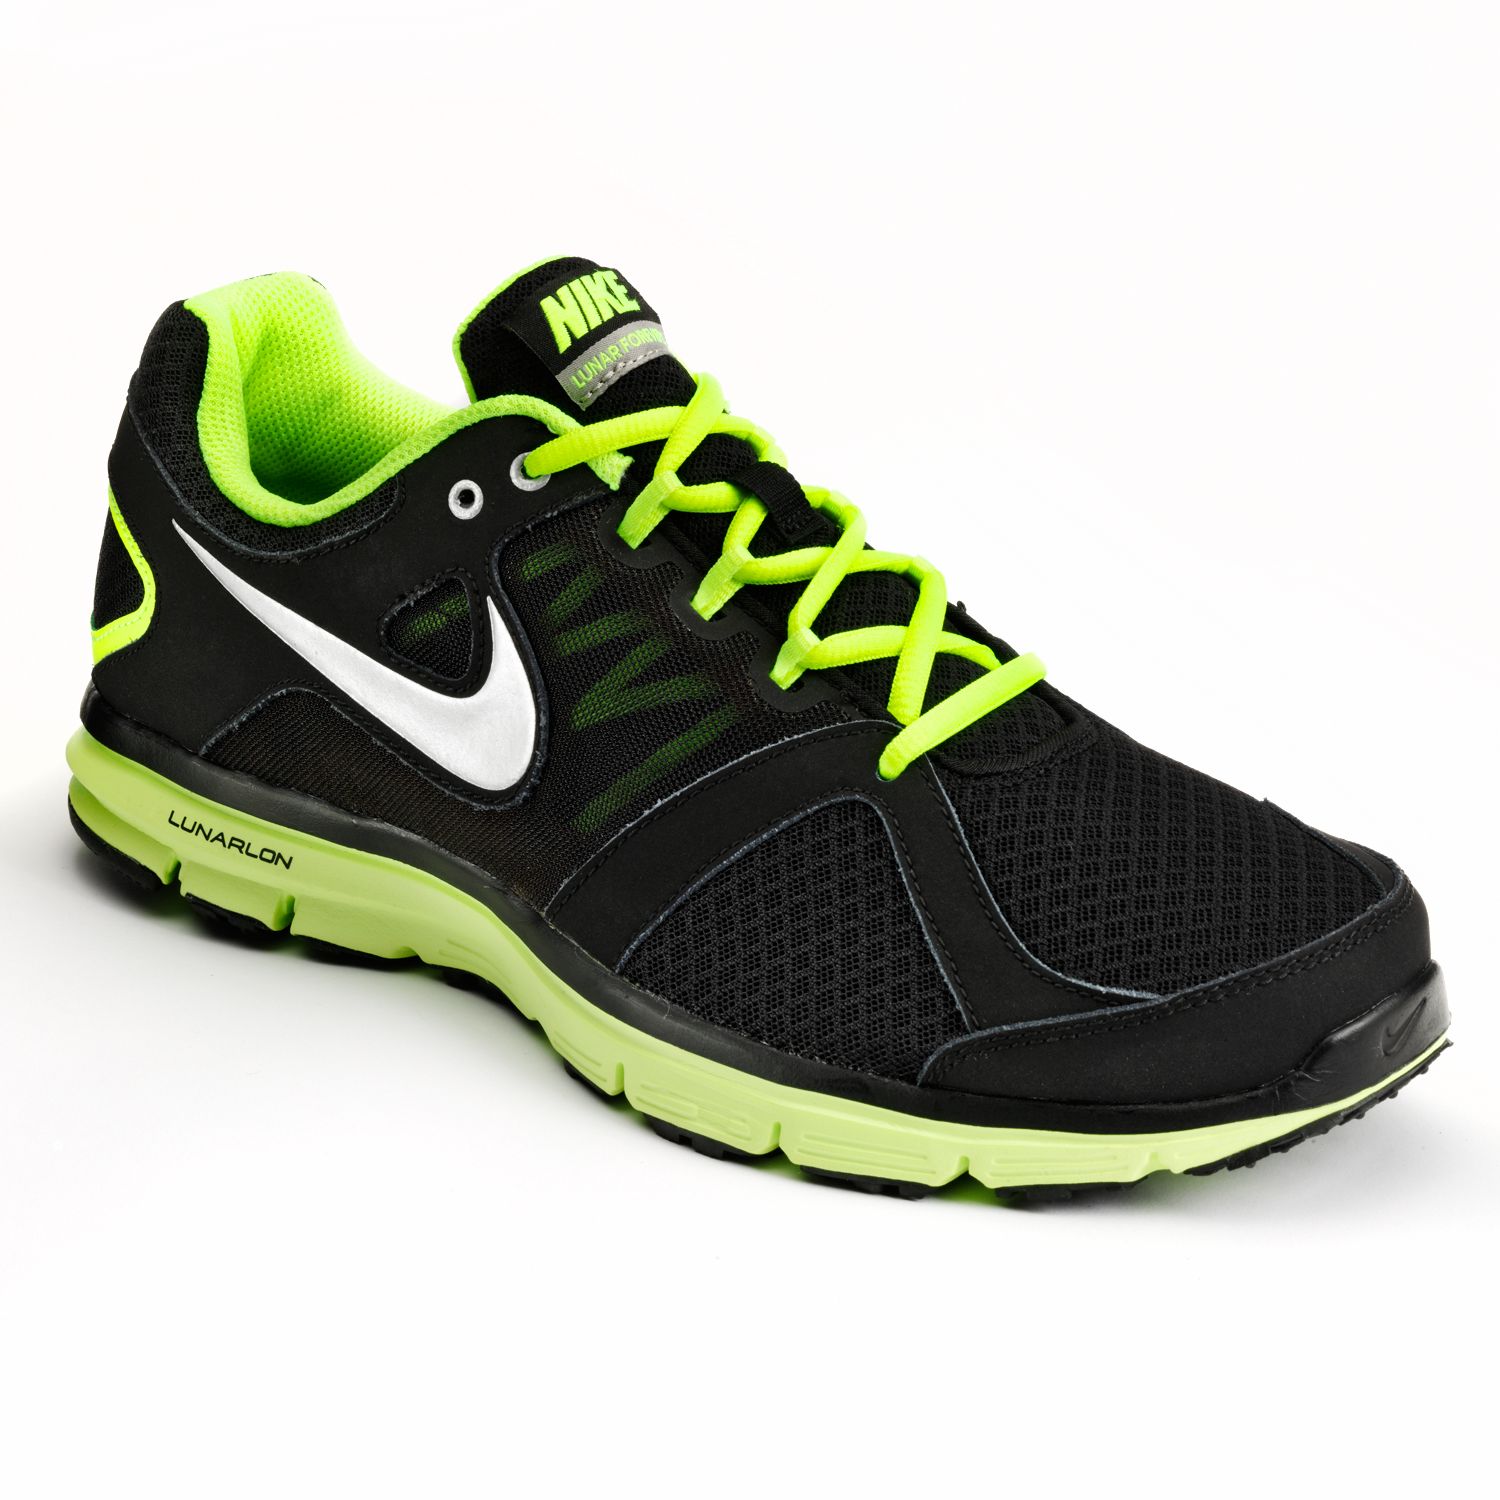 Nike Lunar Forever 2 Running Shoes - Men